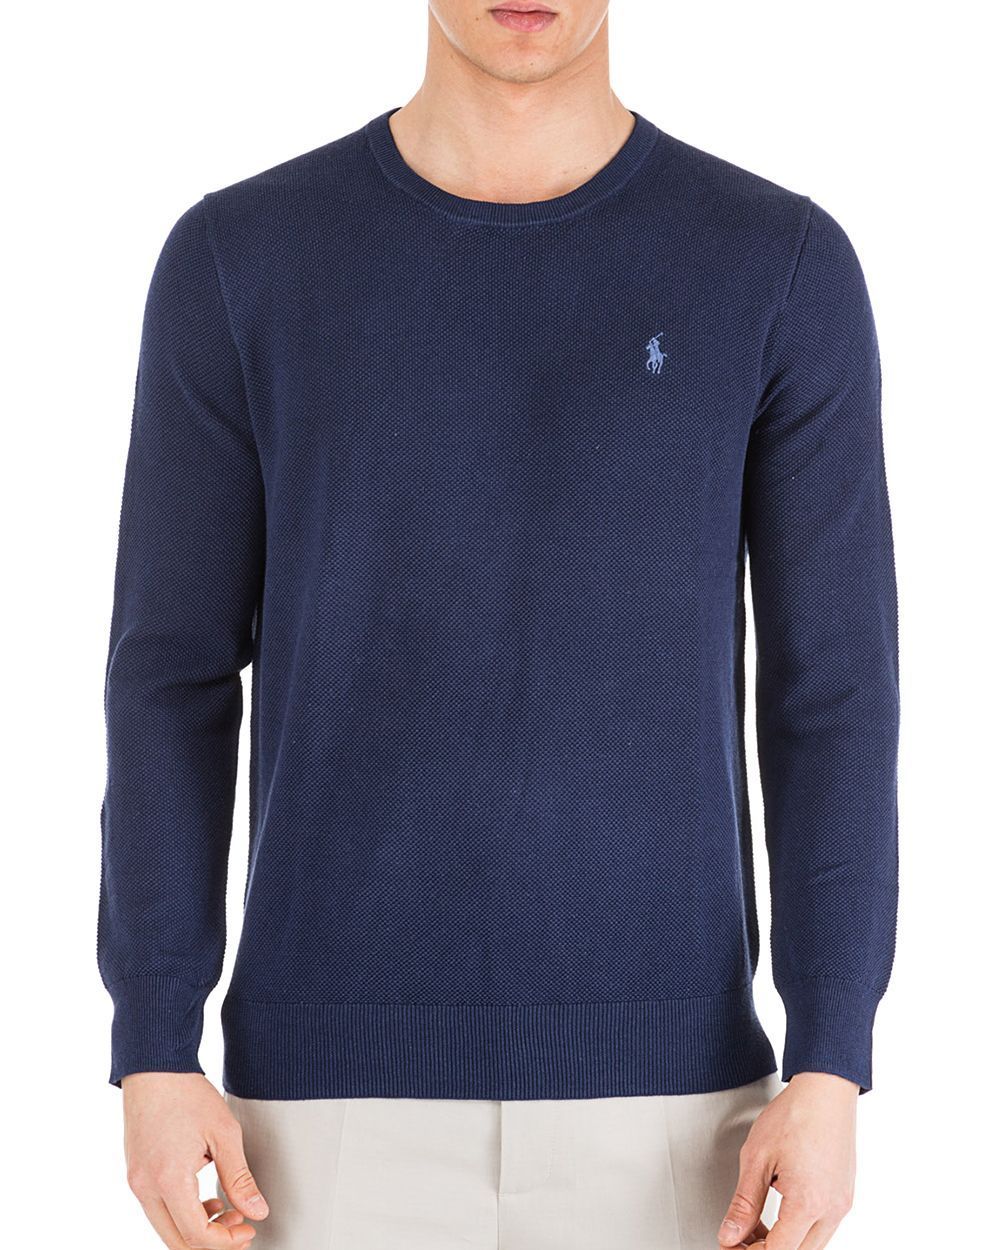 Polo Ralph Lauren Men Navy Blue Crew Neck Sweater - M | Buy Clothing ...